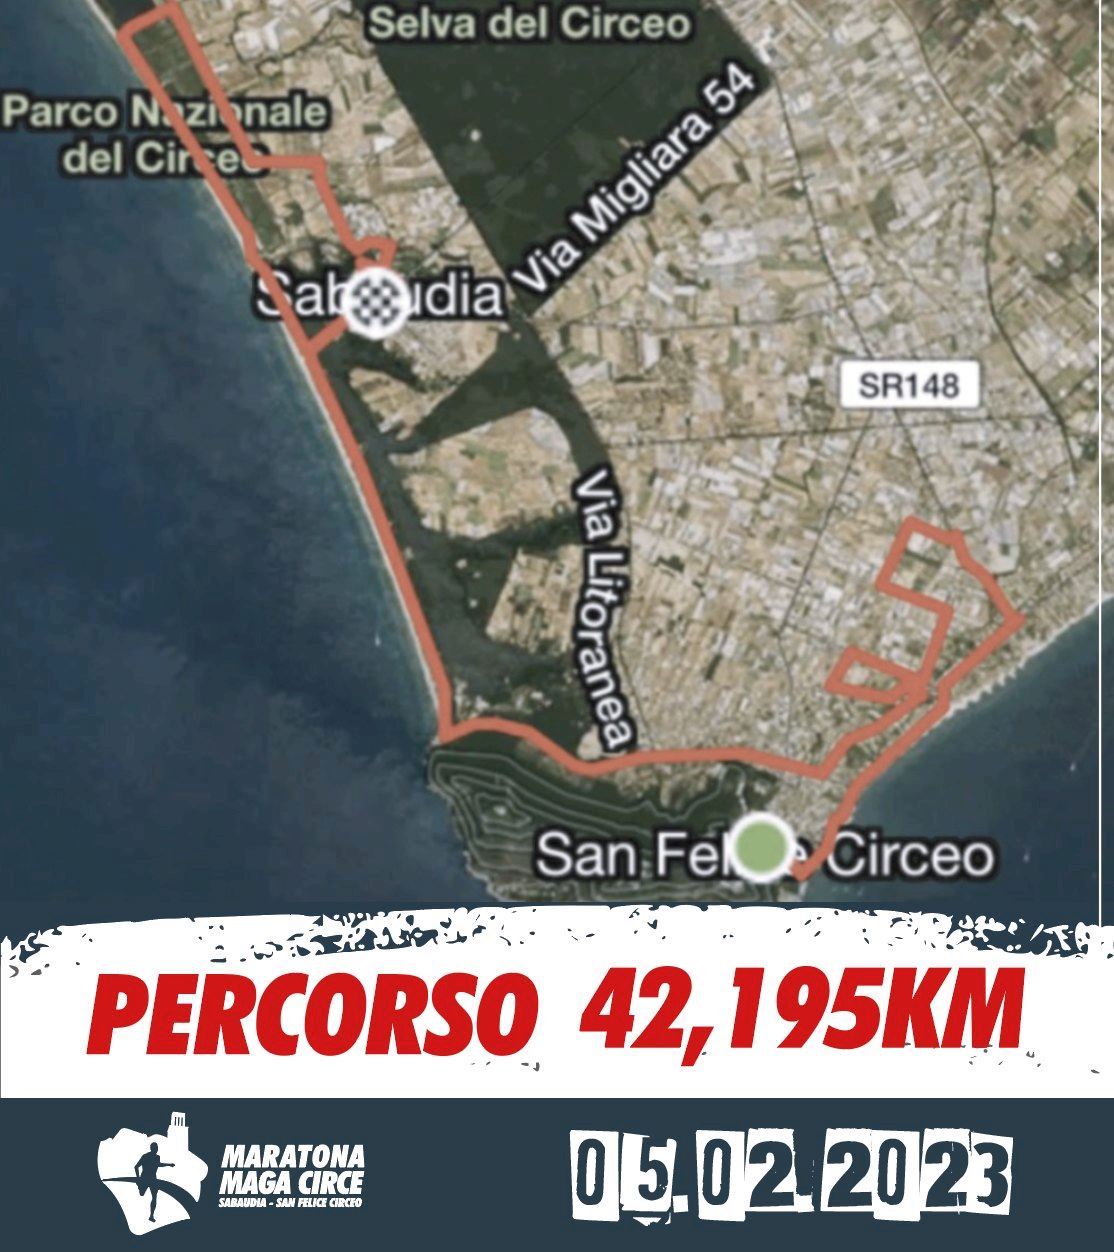 Maga Circe Marathon Route Map